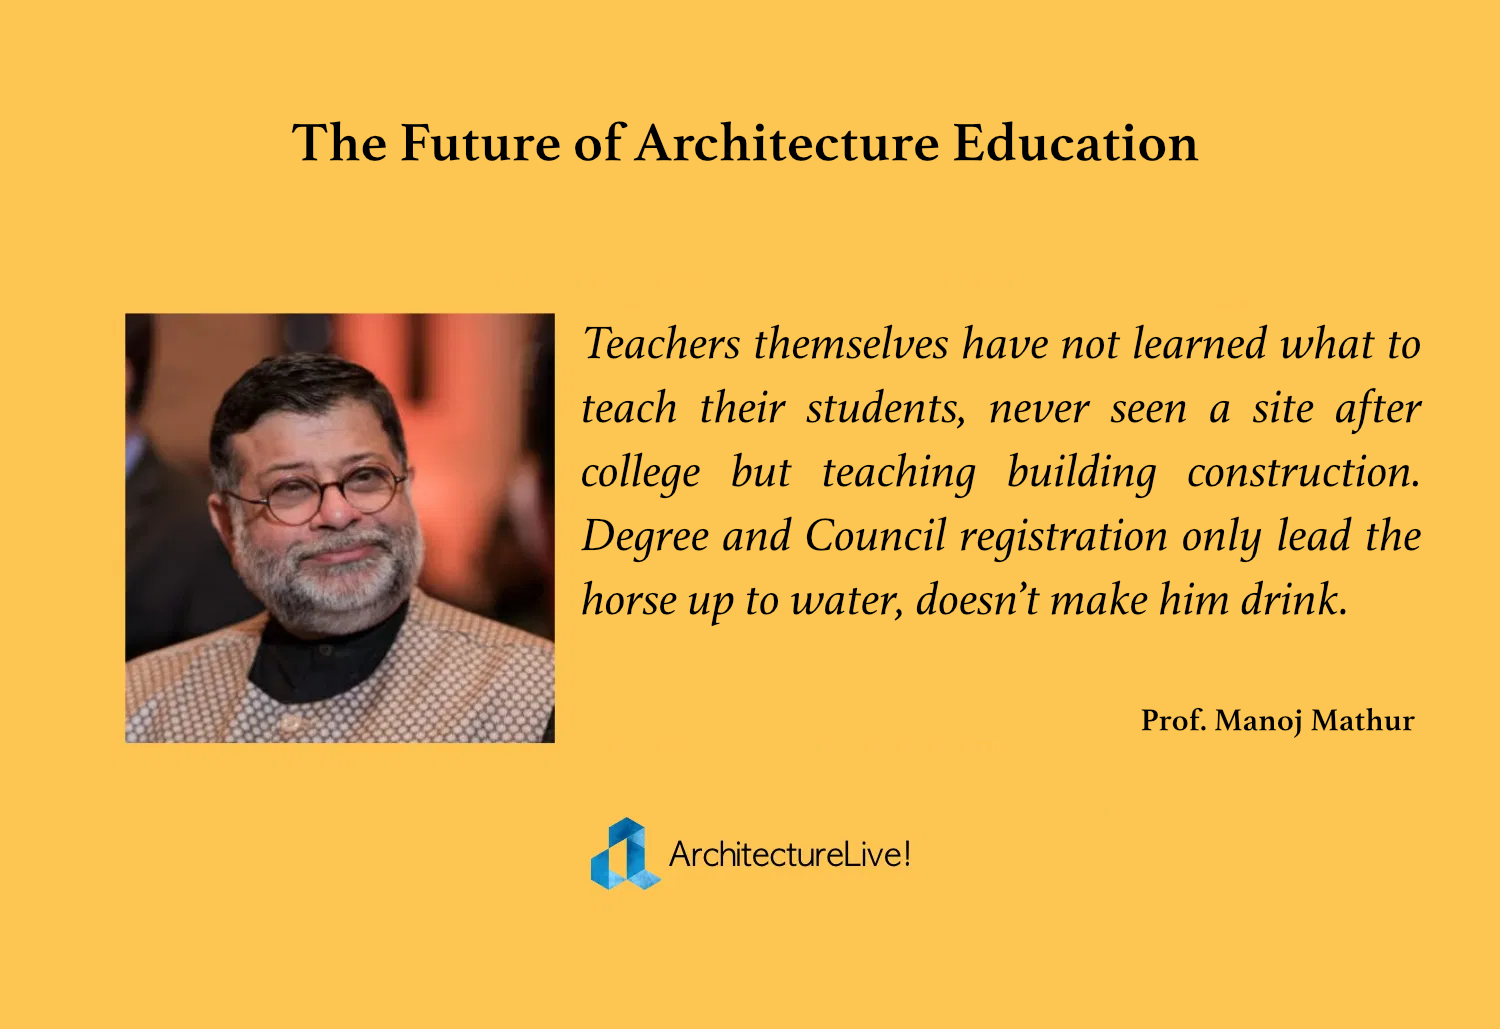 Manoj Mathur on Architecture Education